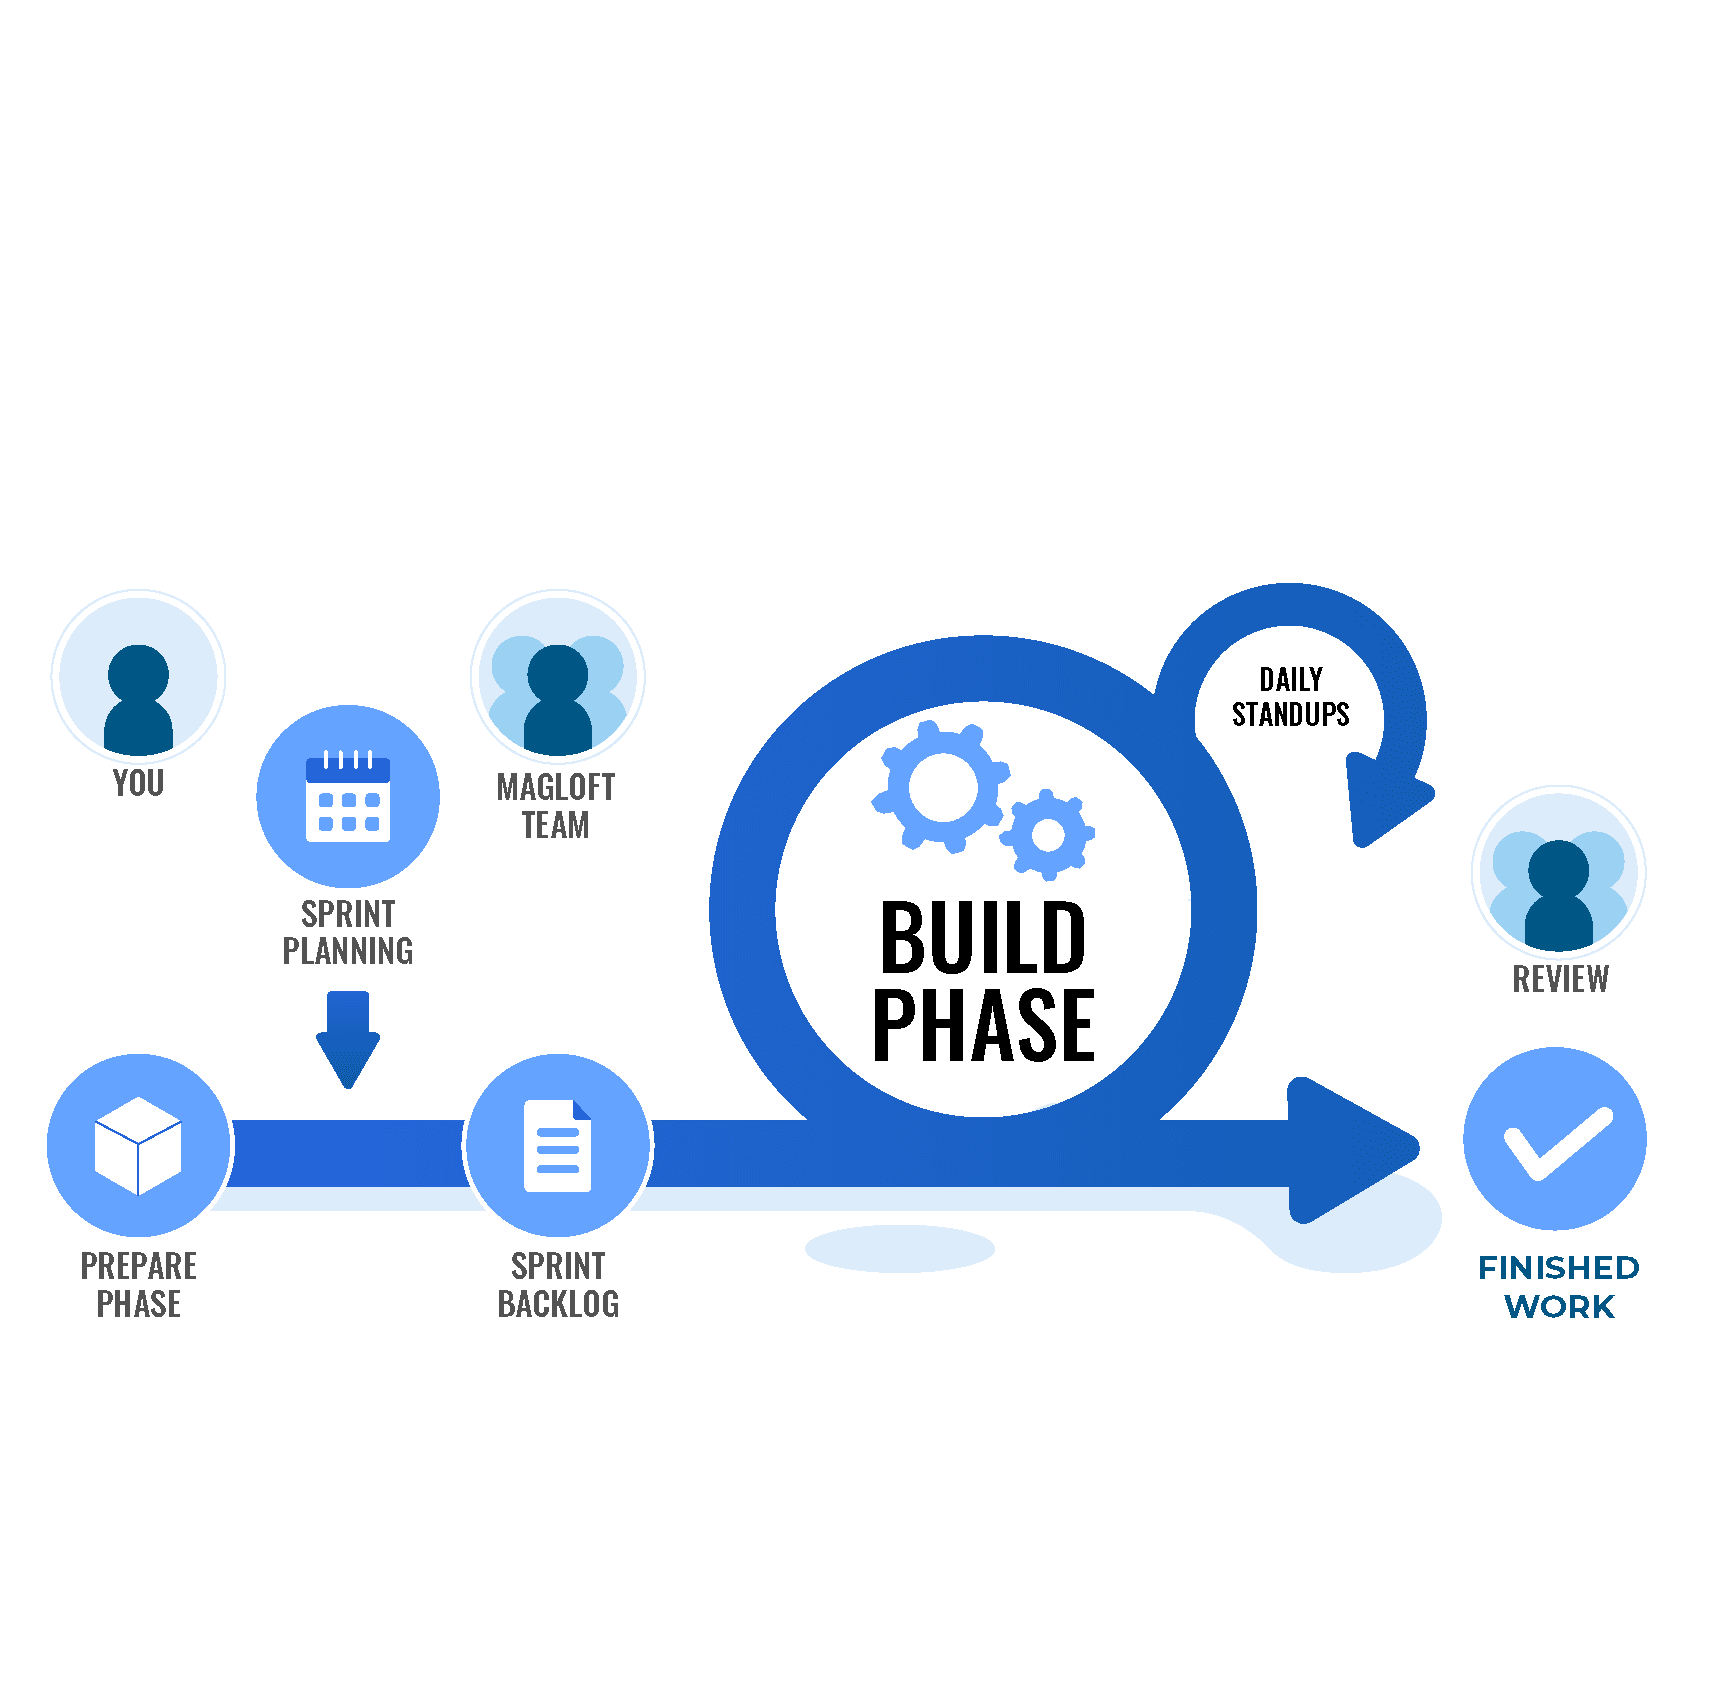 Build Phase